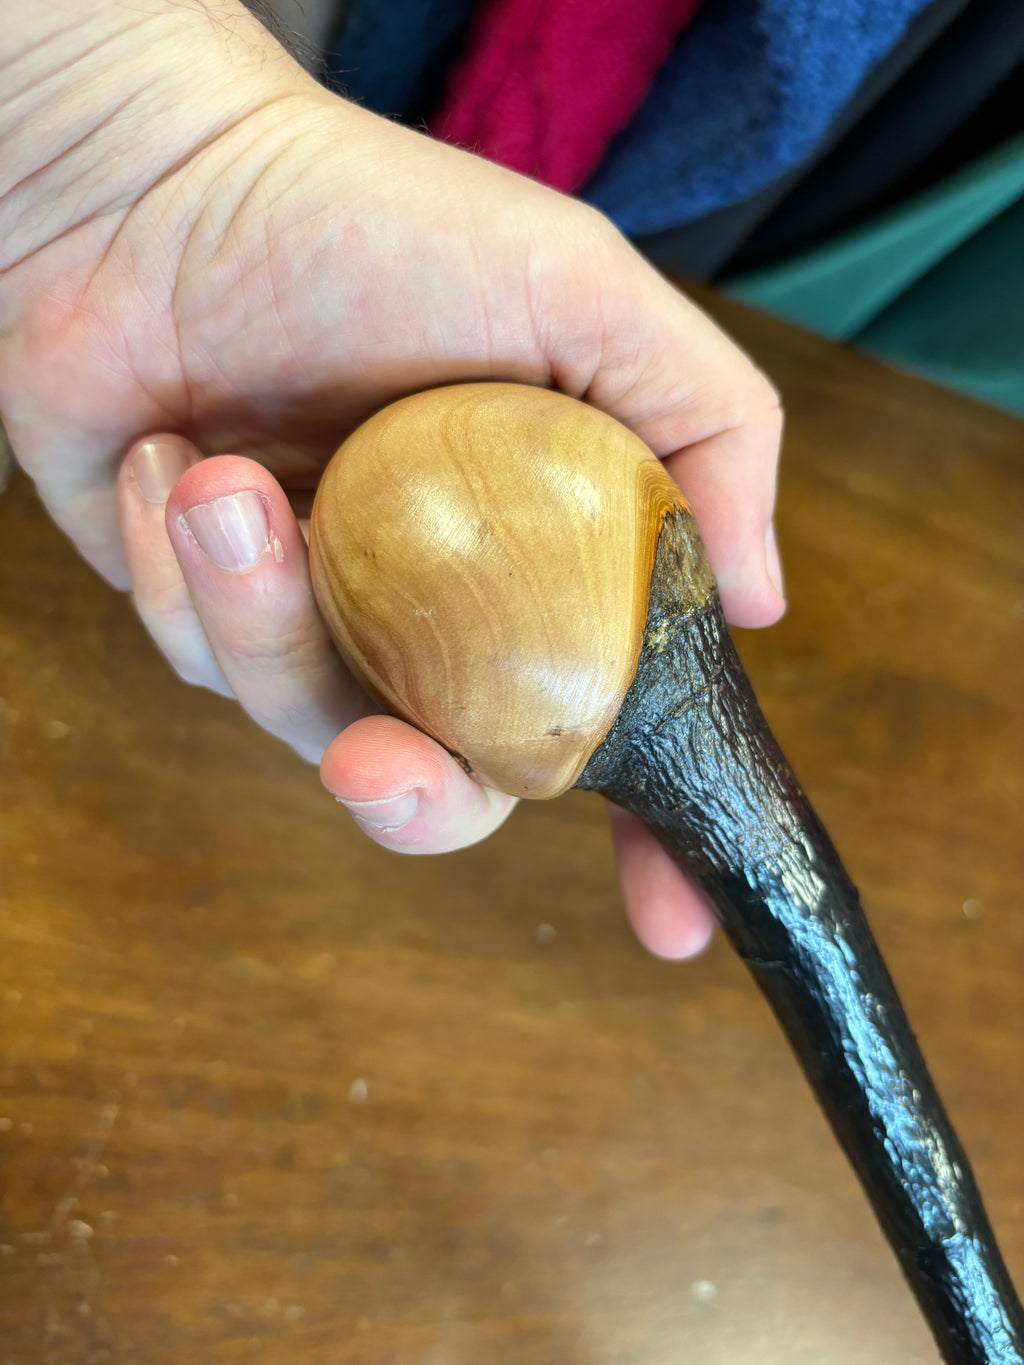 Blackthorn Walking Stick 34 1/2 inch  - Handmade in Ireland